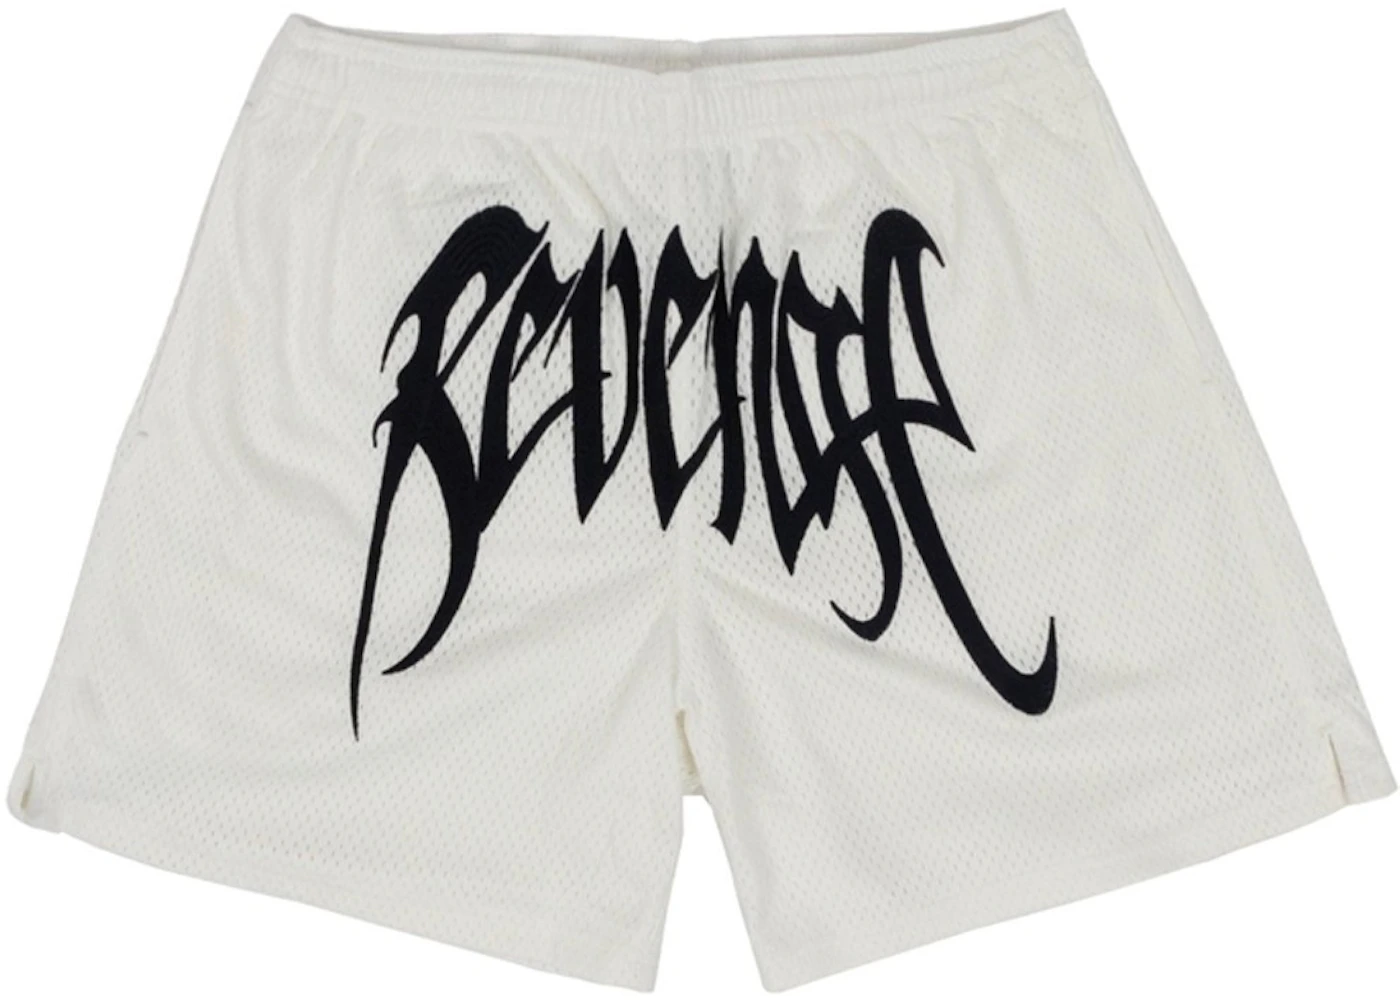 Revenge Embroidered Mesh Shorts White Men's - US